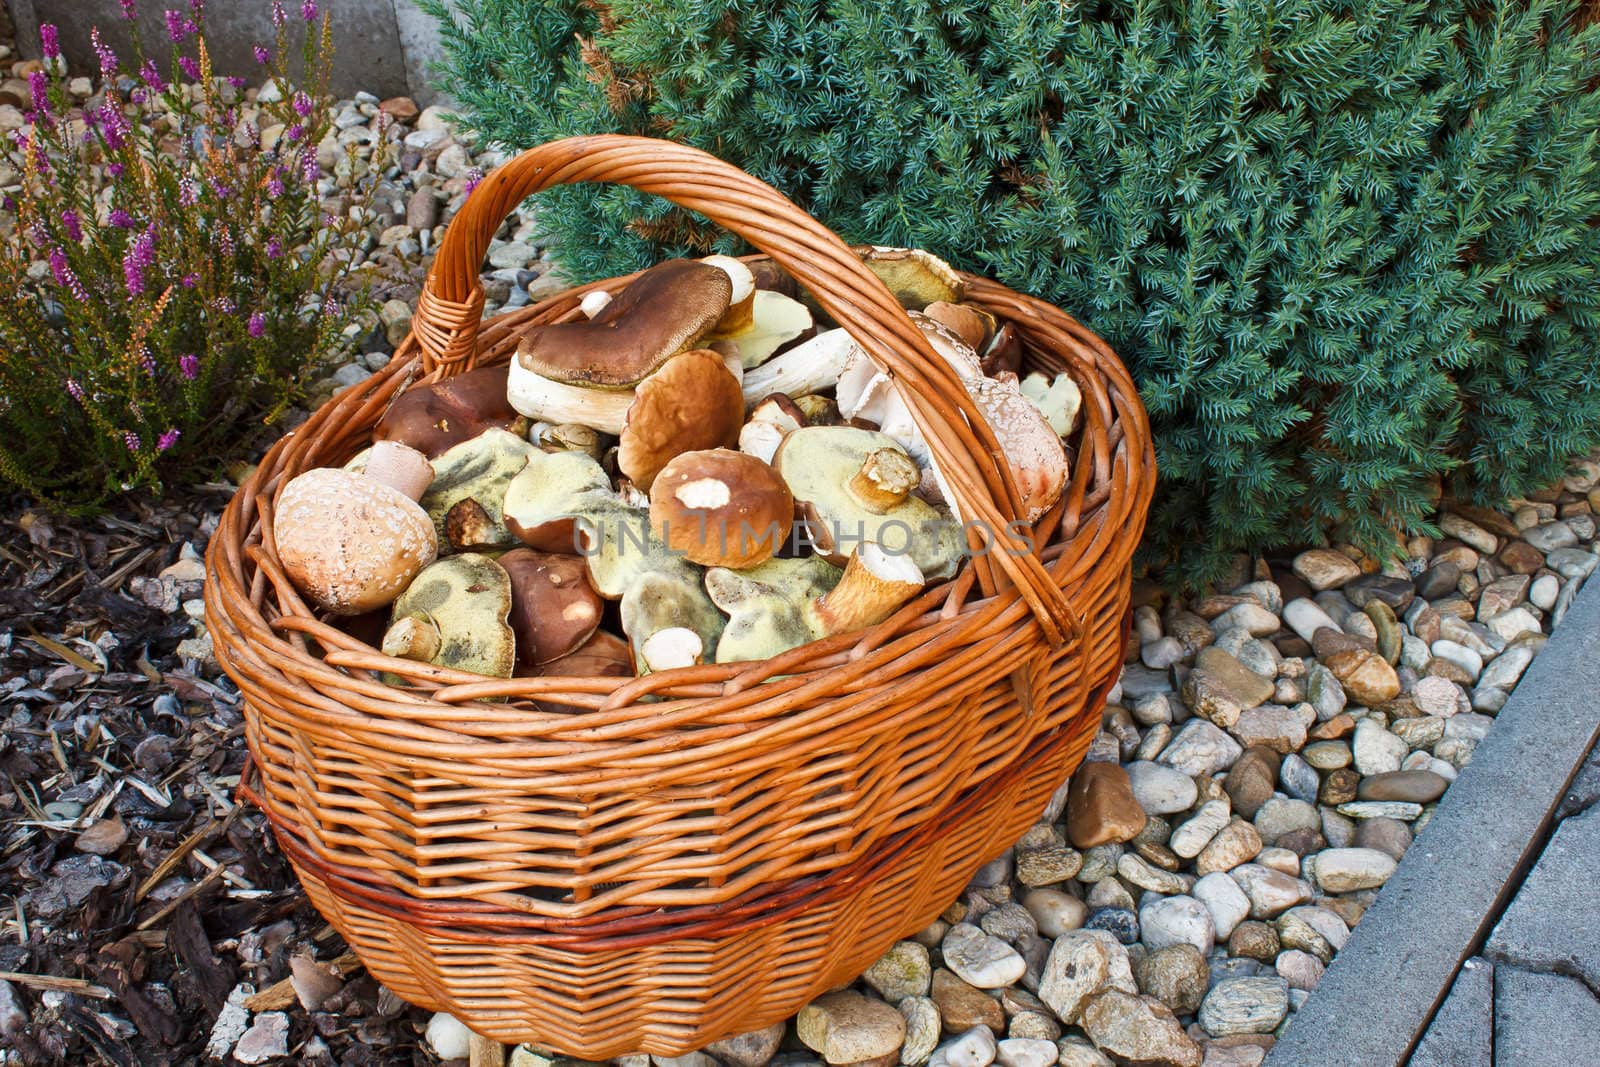 Full basket of fresh autumn mushroom